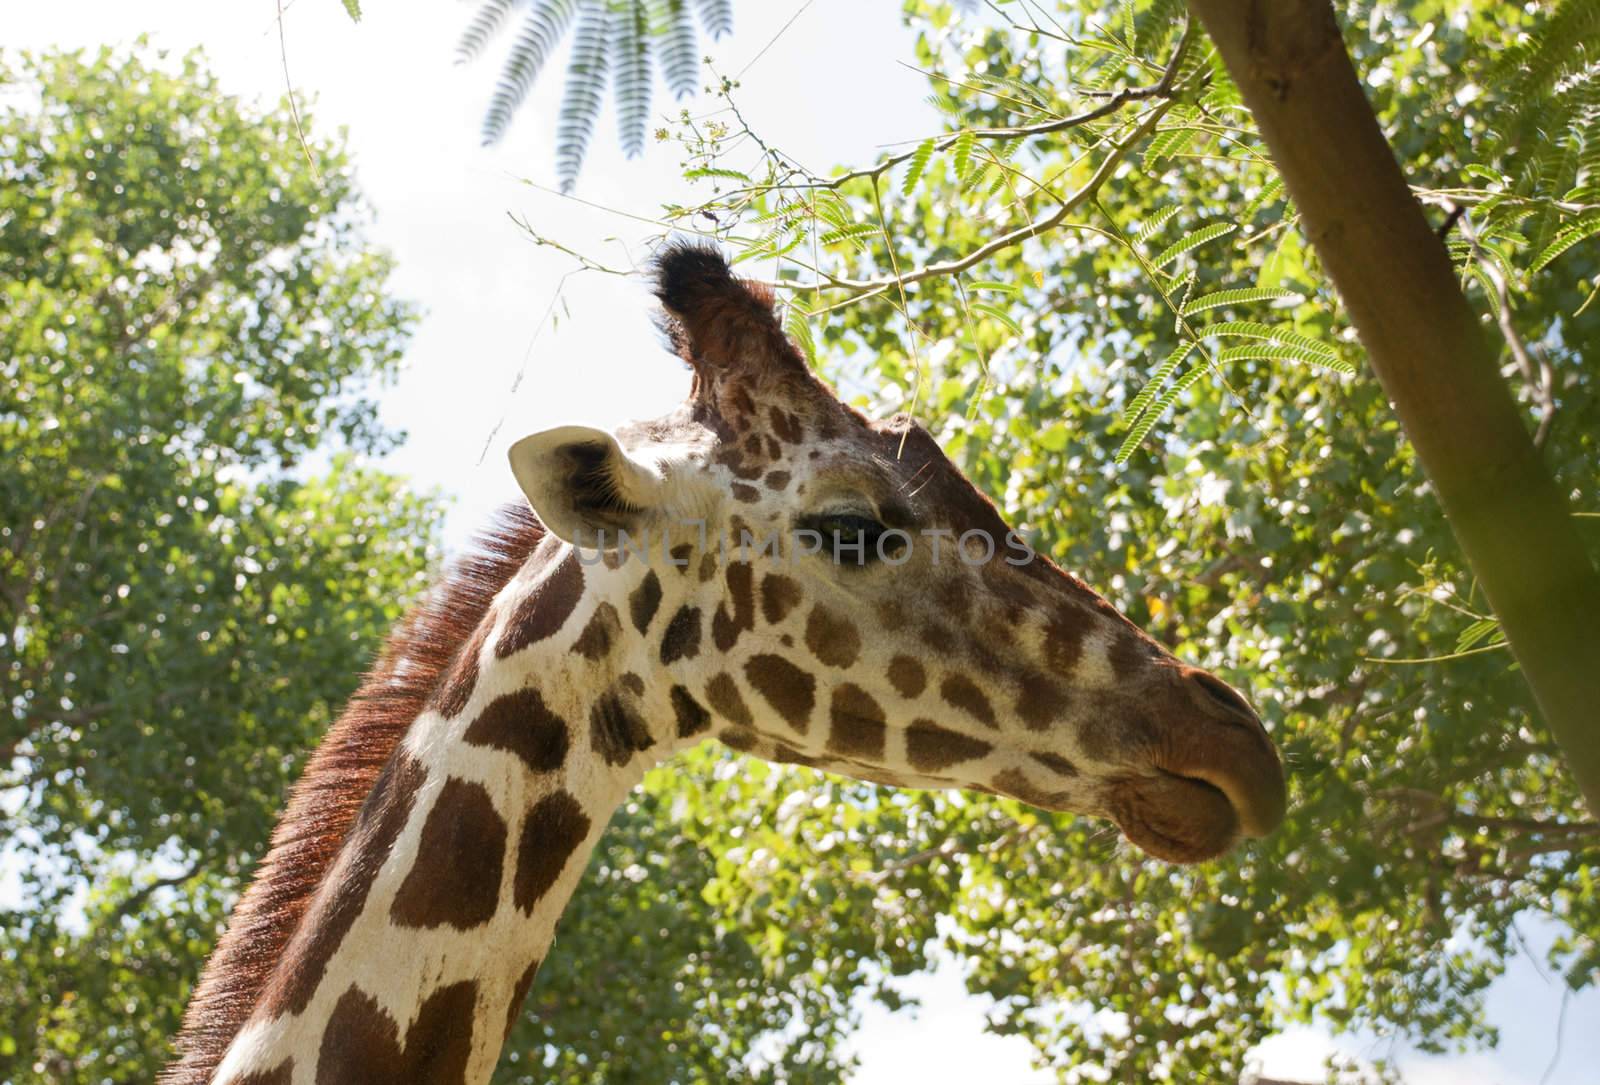 Giraffe eating leaves by PDImages